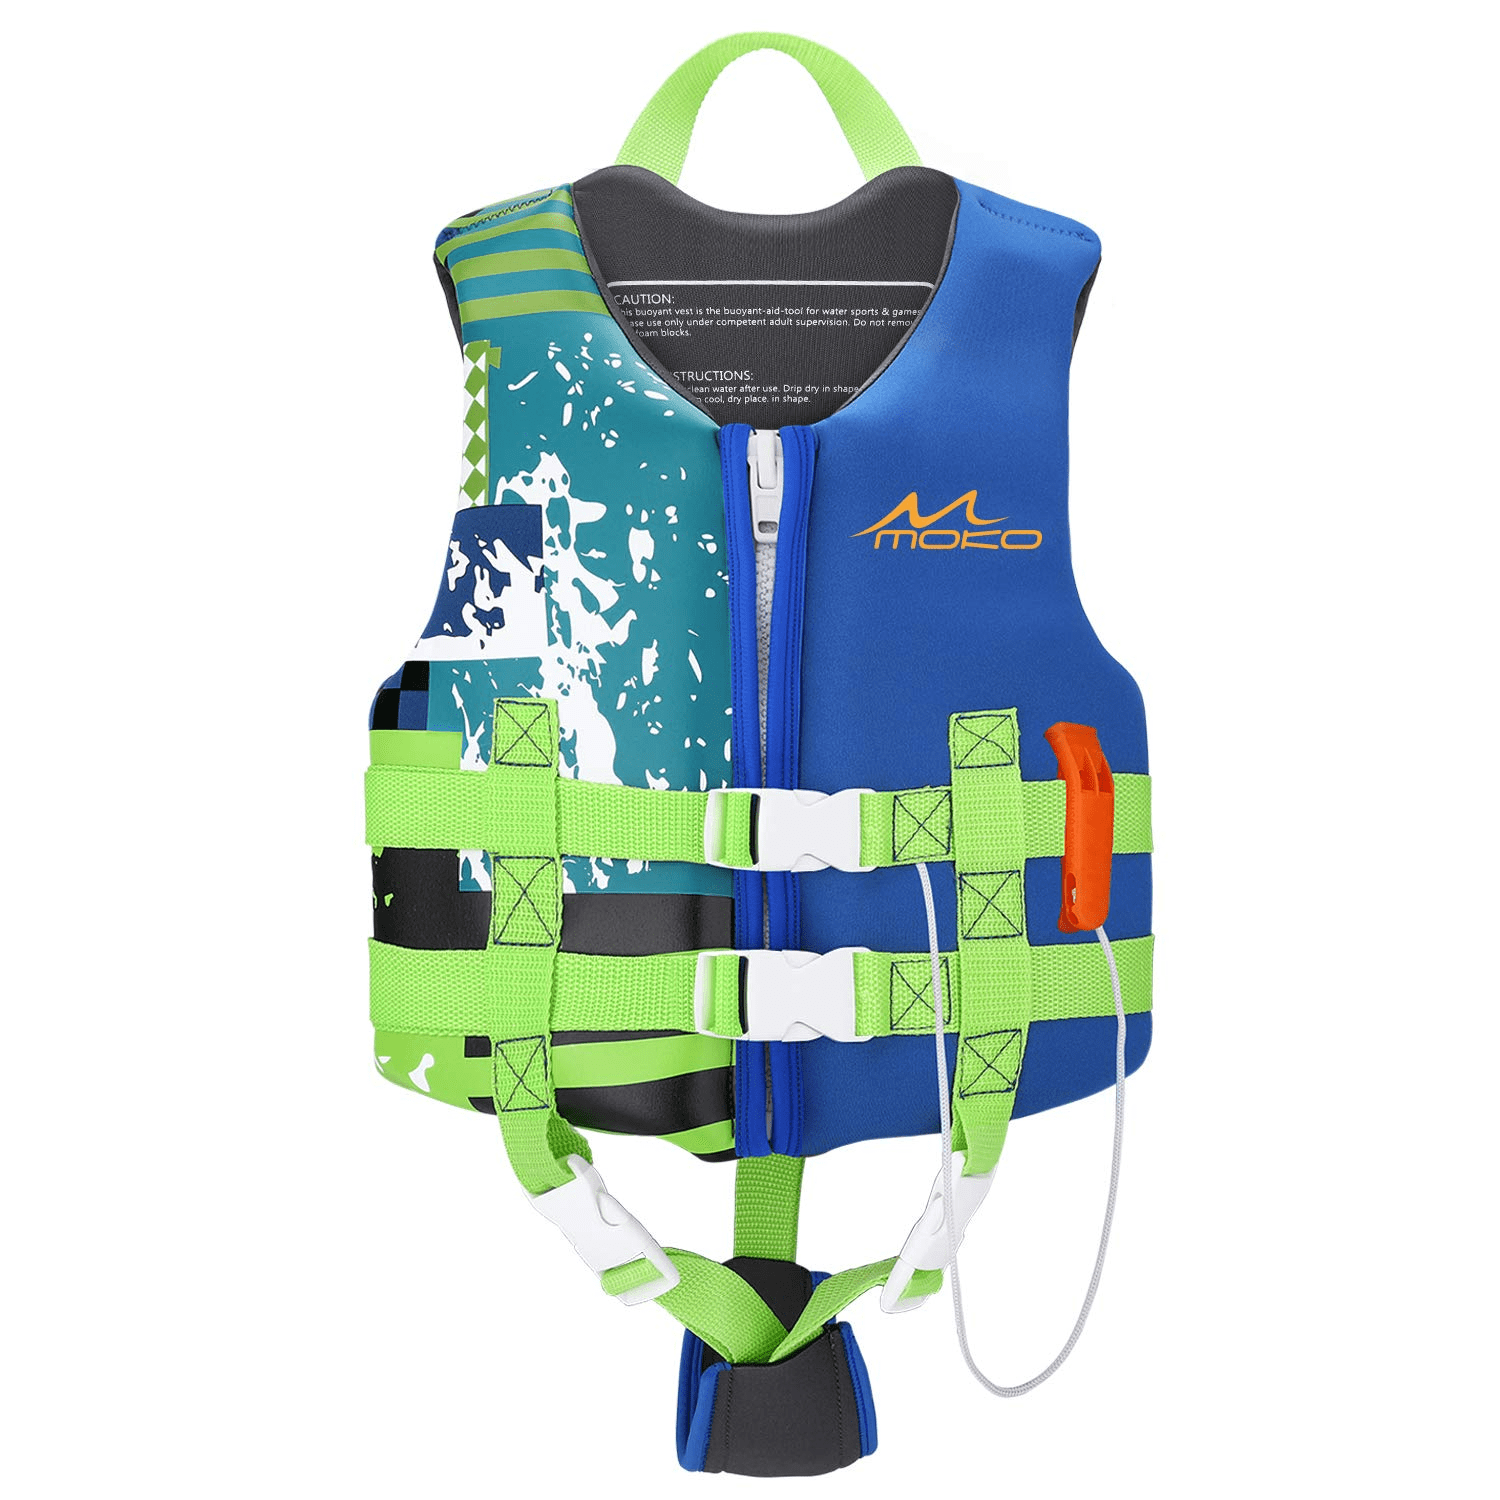 New Kids Swim Life Jacket Float Vest Swimming Pool Buoyancy Aid Child WaterSport 